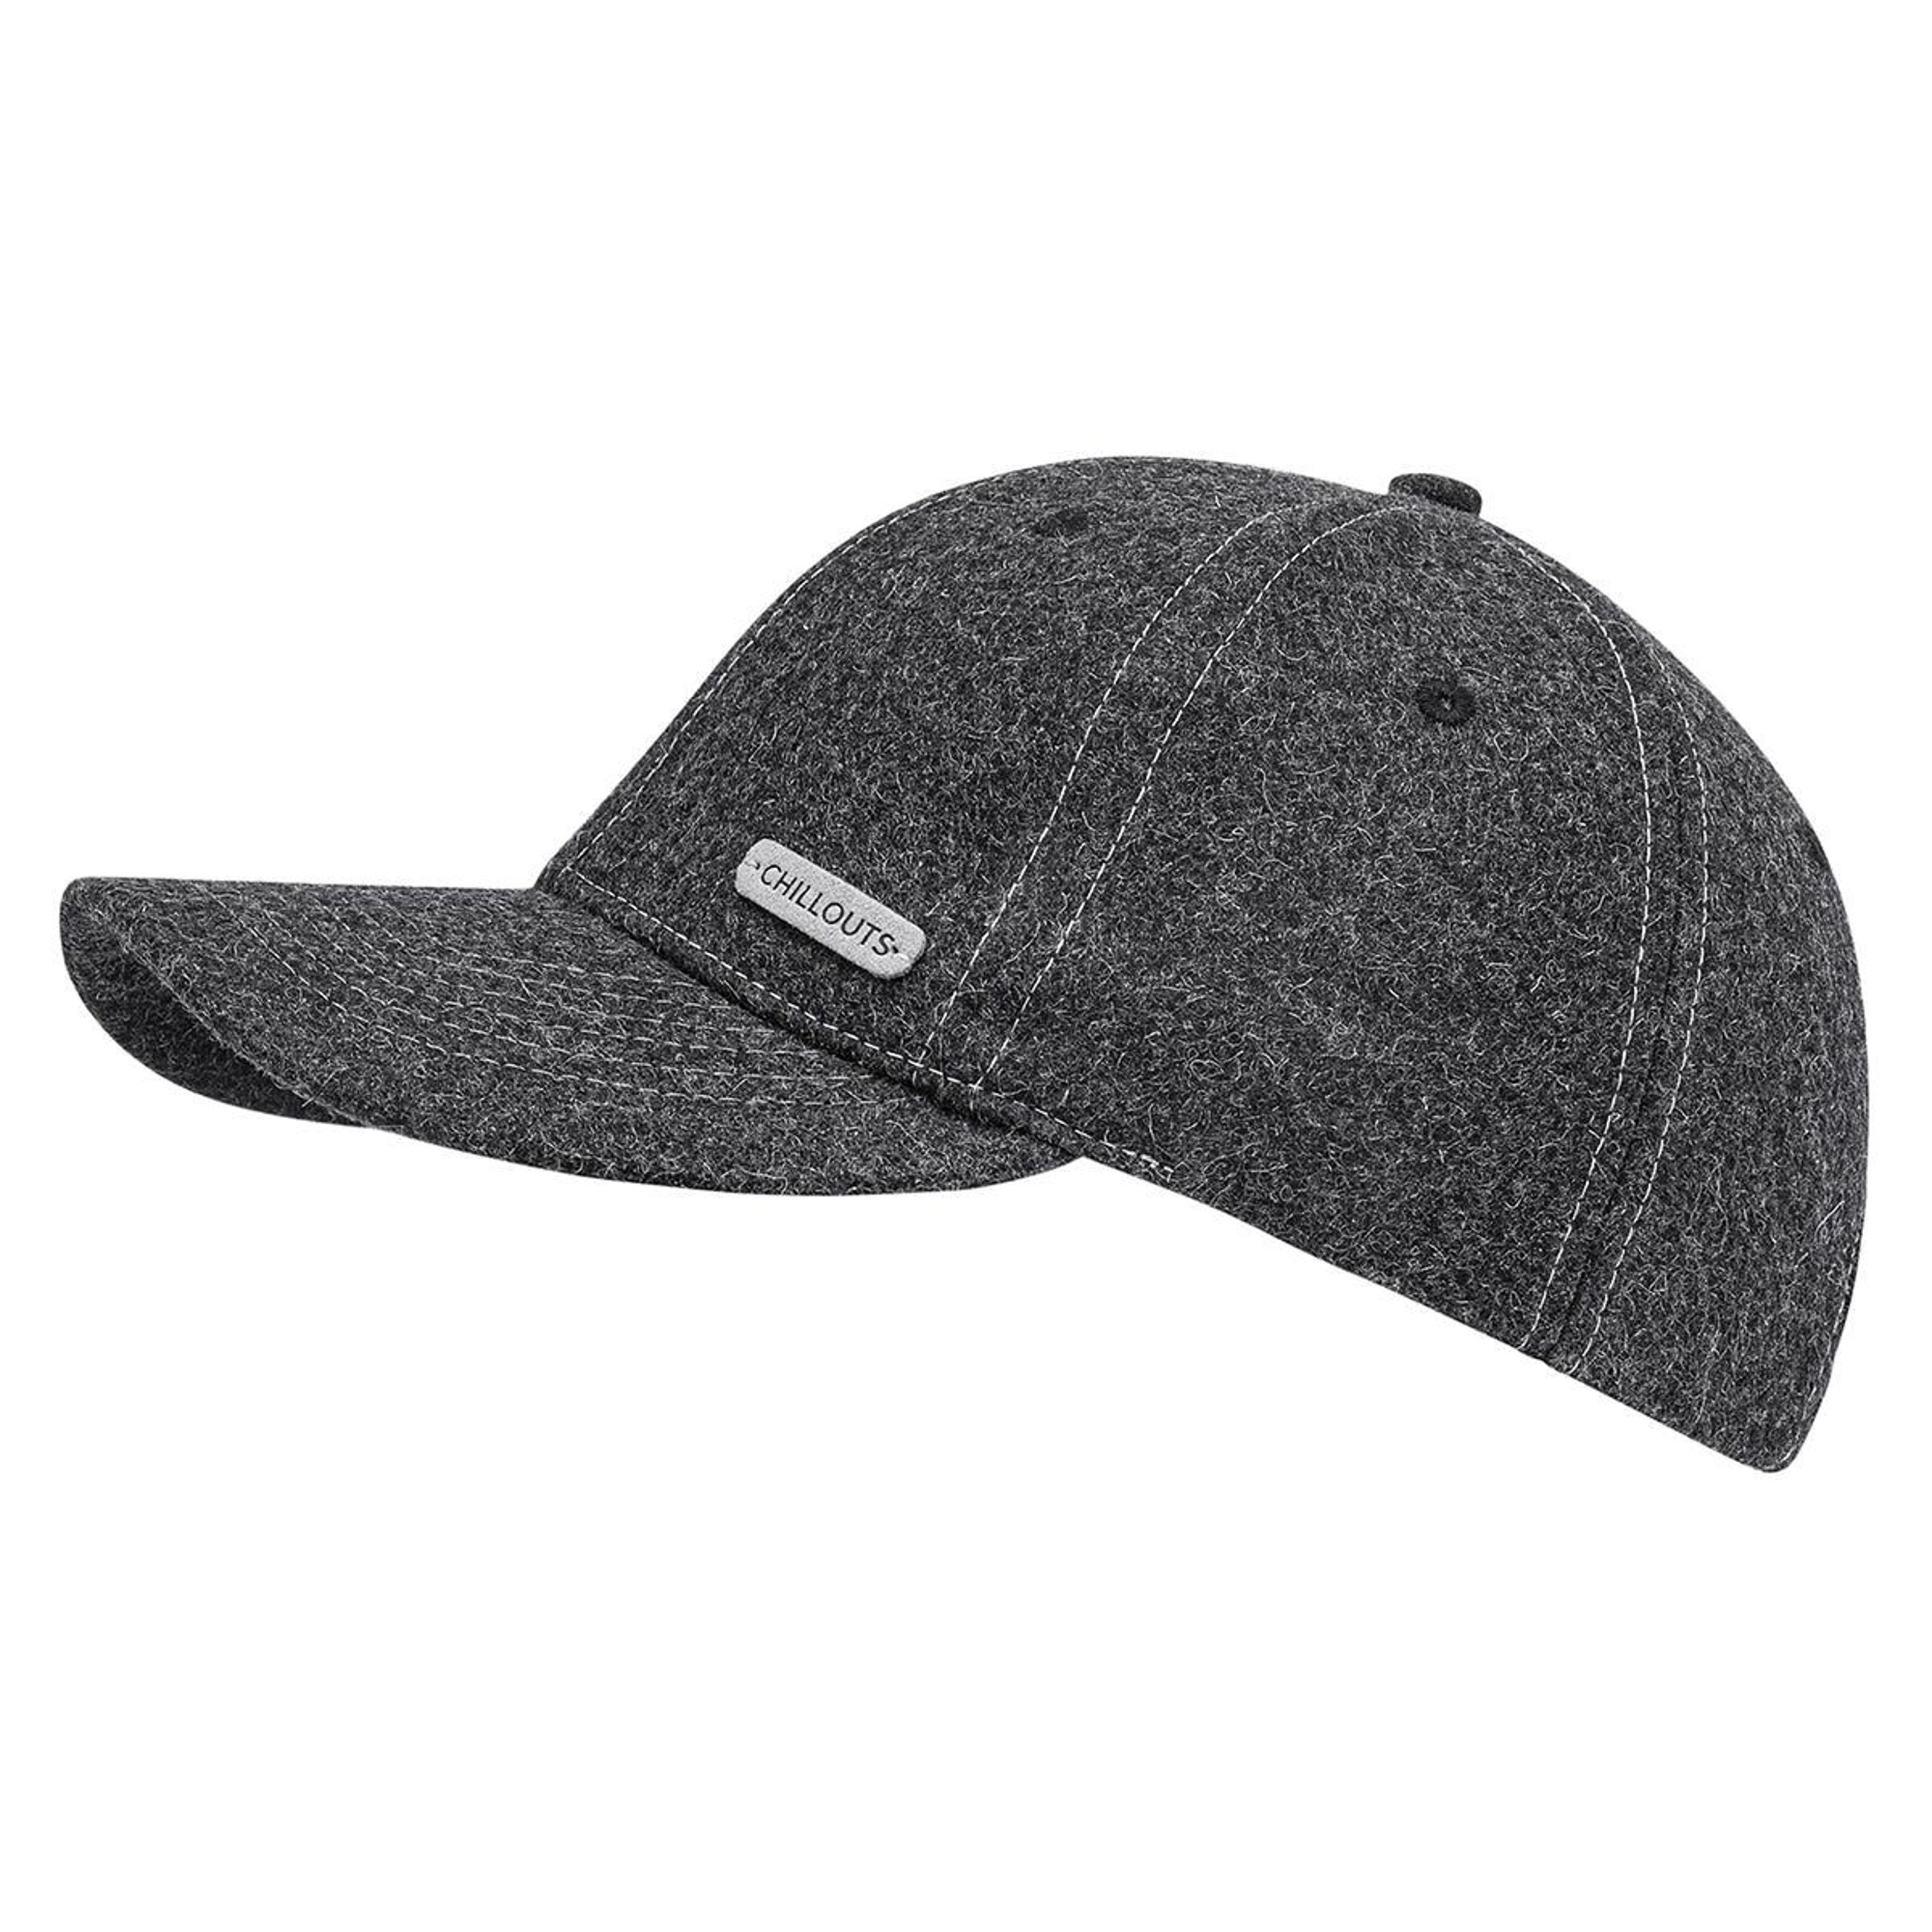 Mateo wholesale (Baseball Hat Cap Buy Cap)